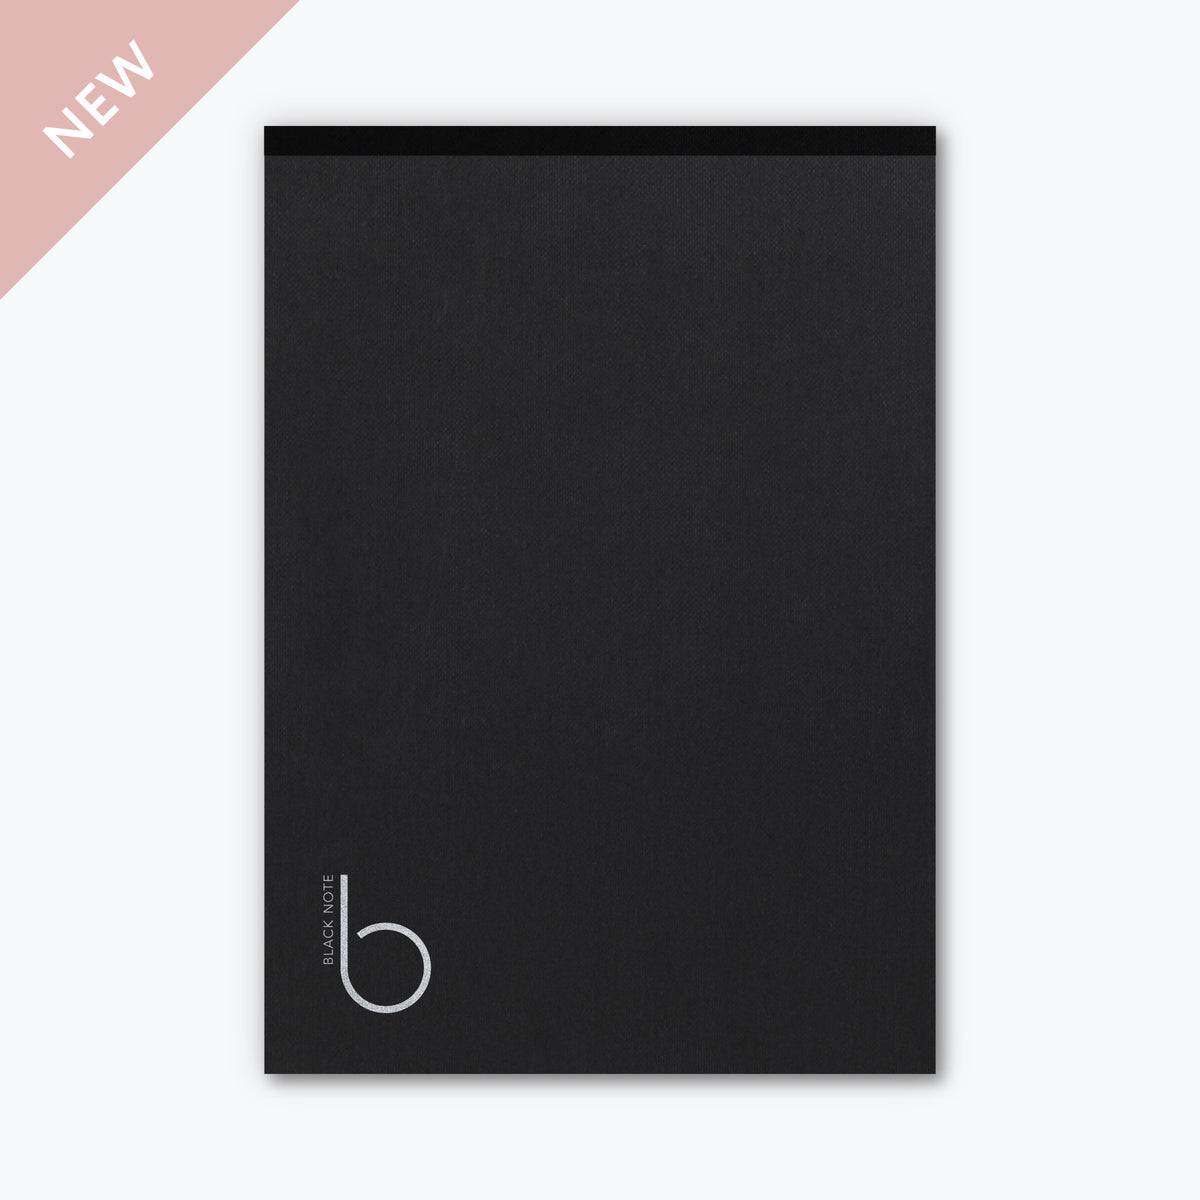 Pilot - Notepad - Black Series - B5 (Blank) <Outgoing>